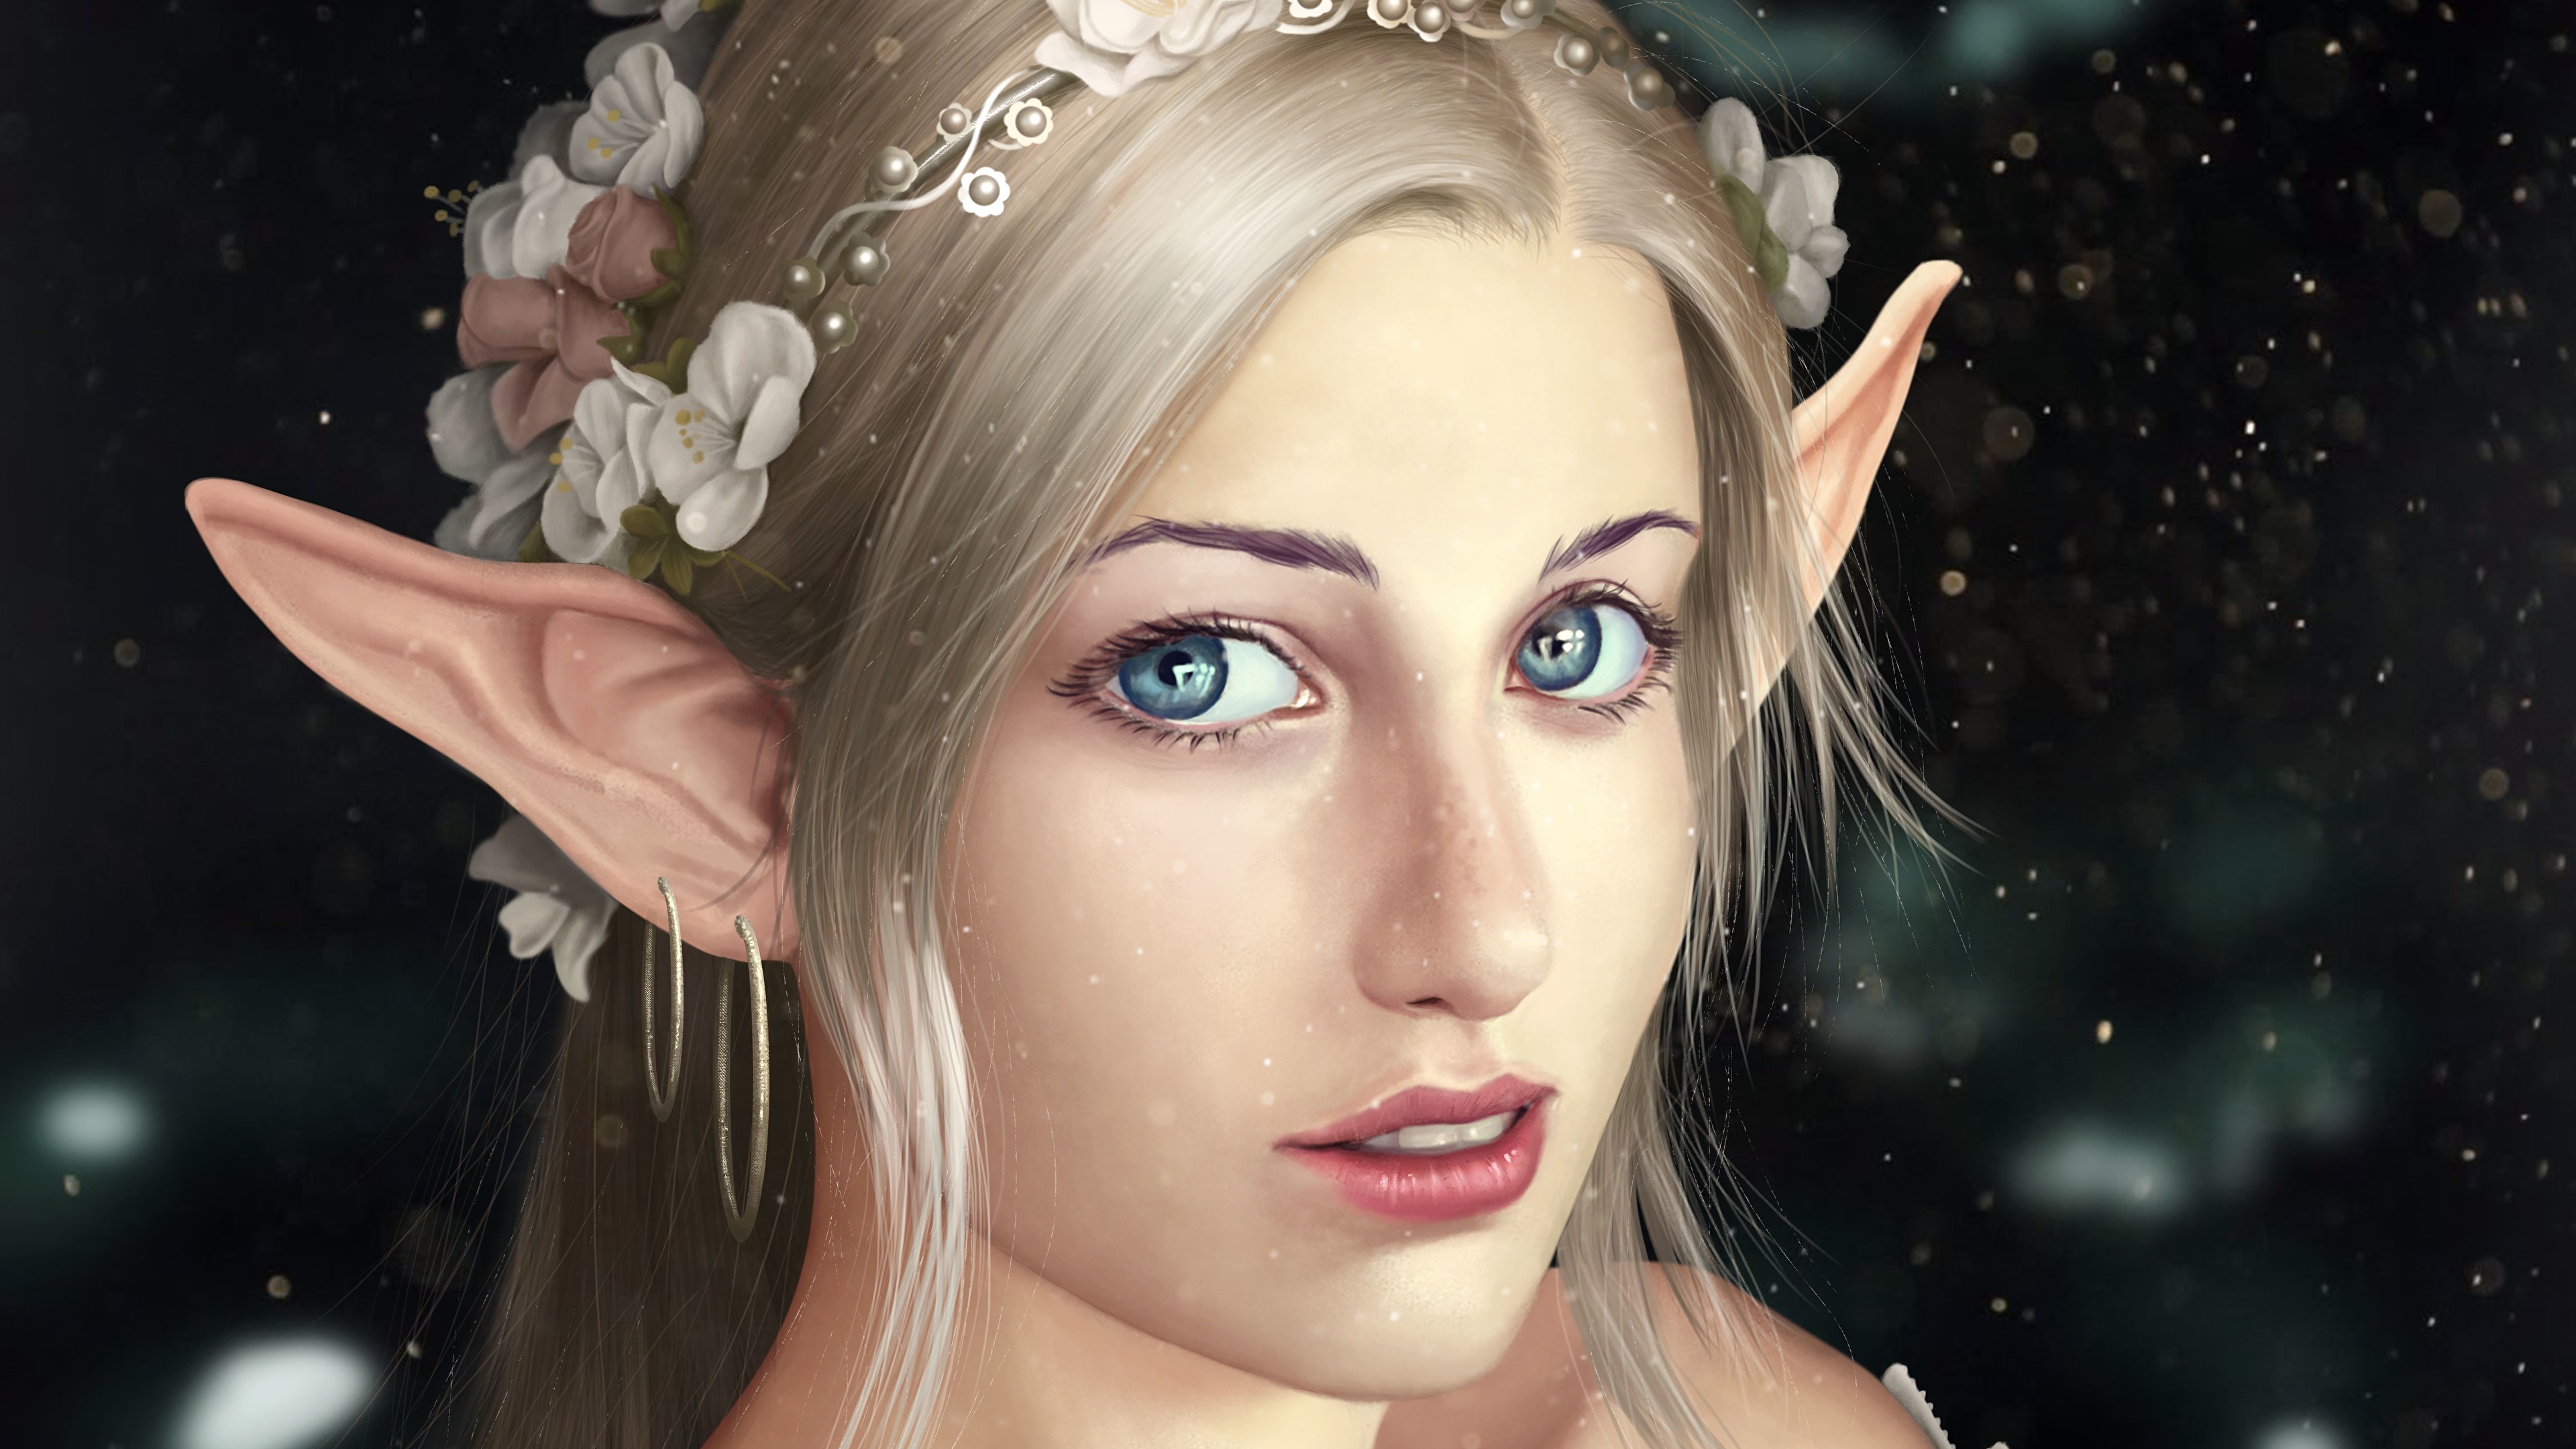 Blonde Elf Female Art and Illustrations - wide 4